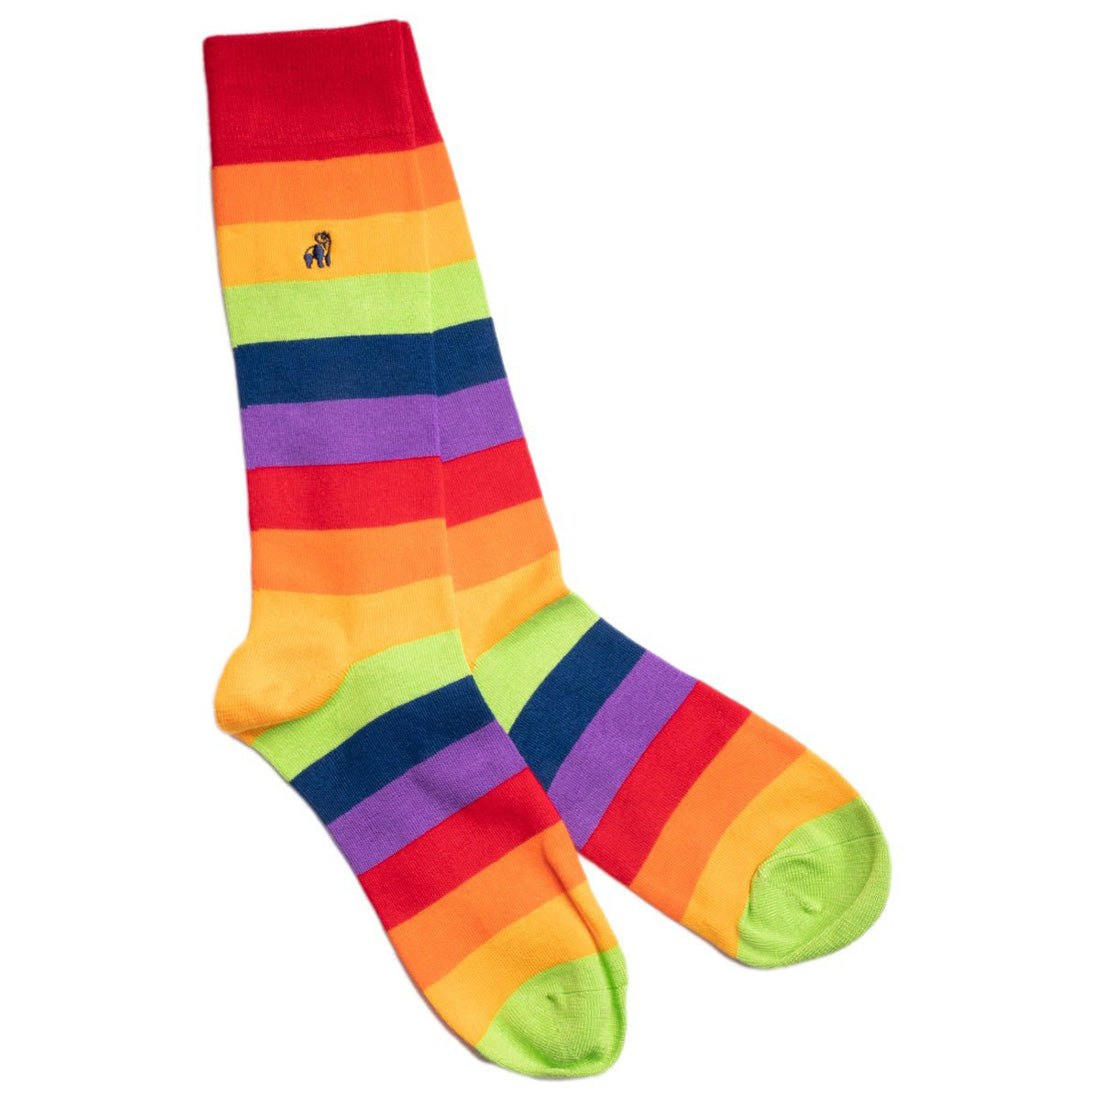 socks-pride-bamboo-socks-1_20b08a67-05f1-4f94-af91-52ce7fedecaf.jpg